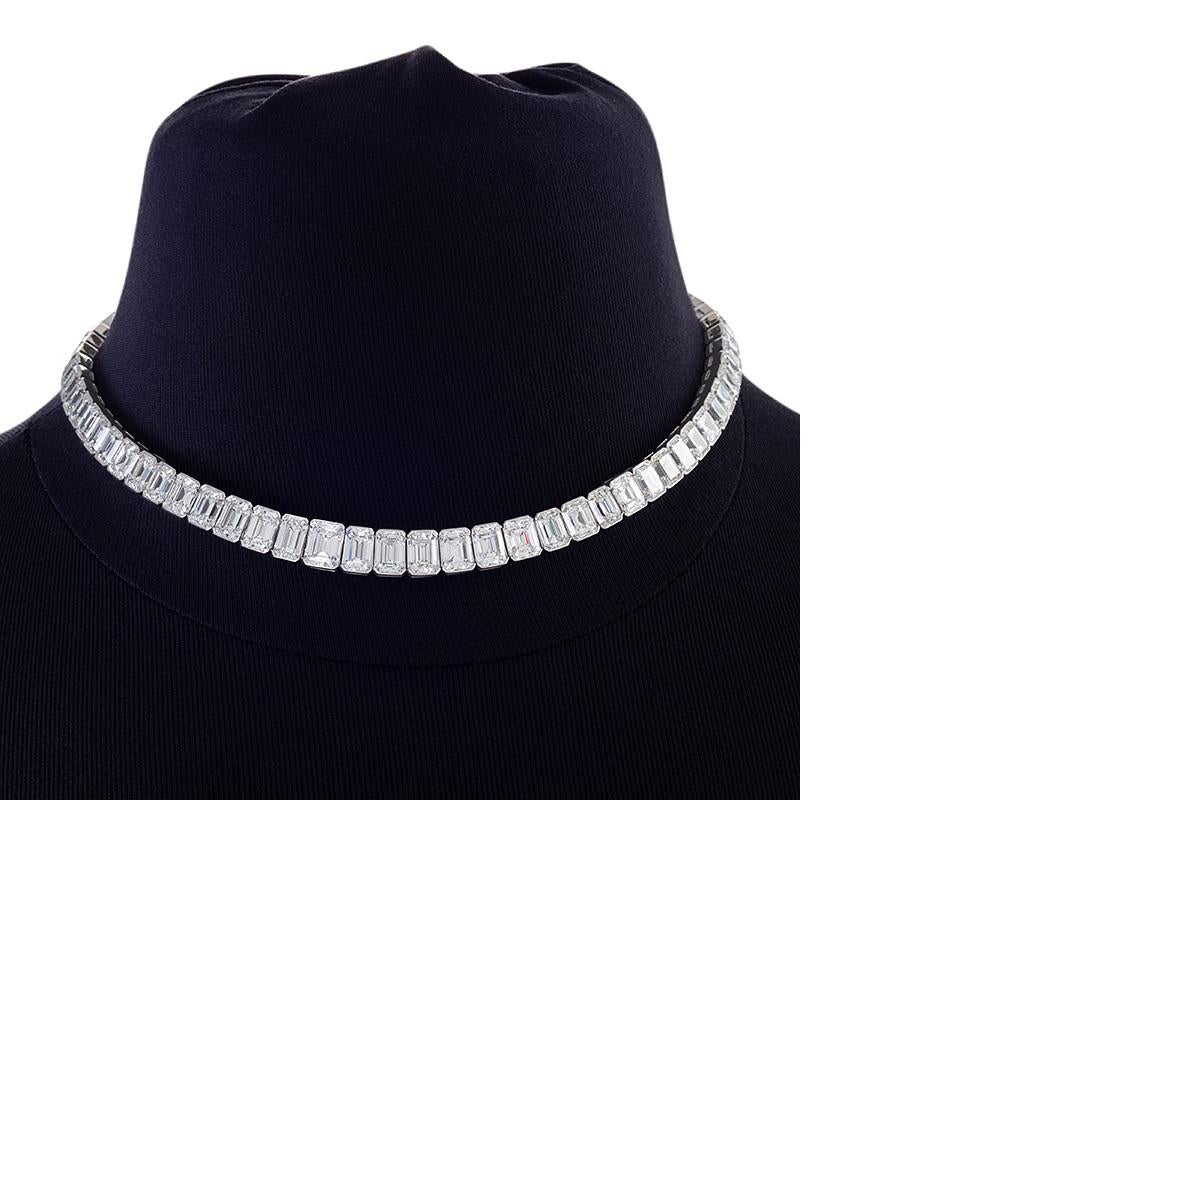 riviere diamond necklace